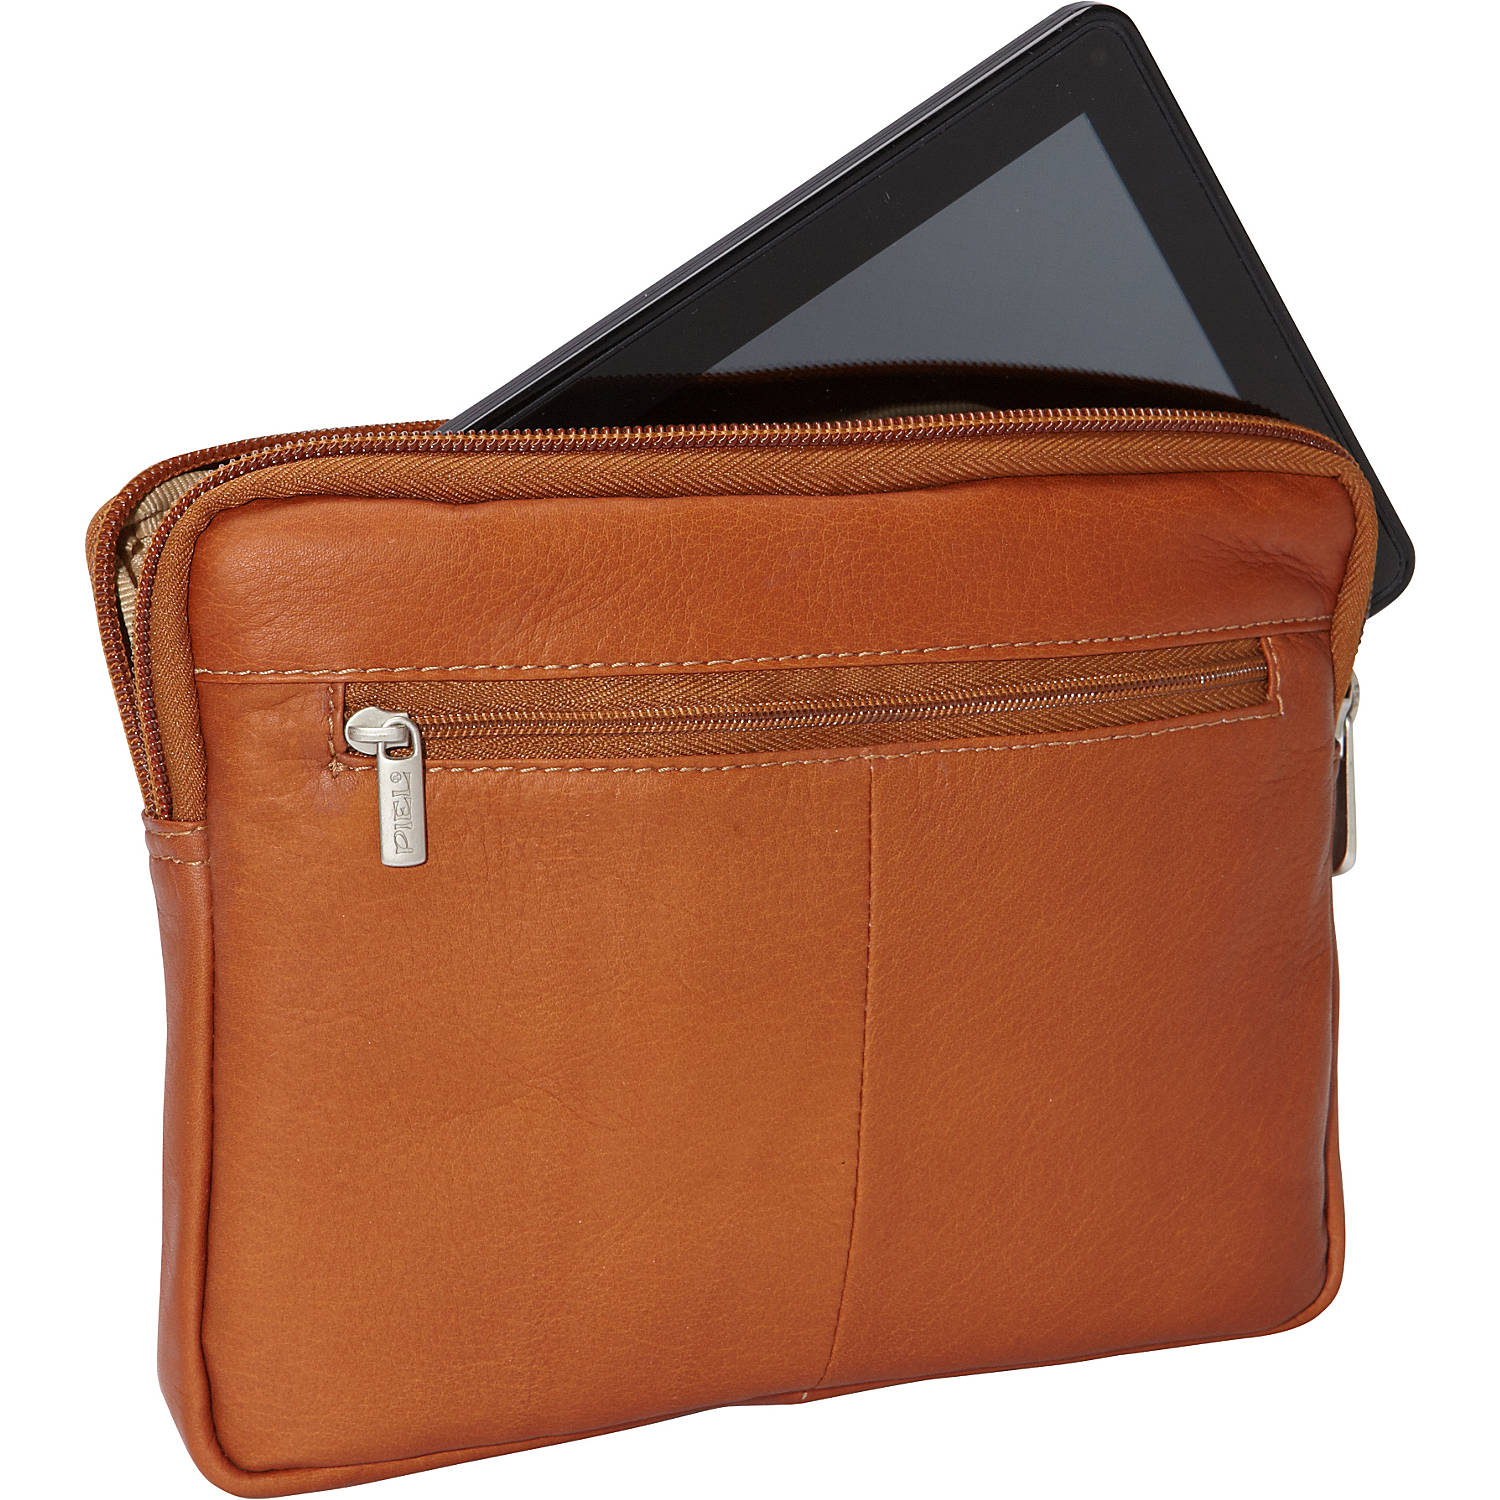 Zip around leather sleeve for iPad Air